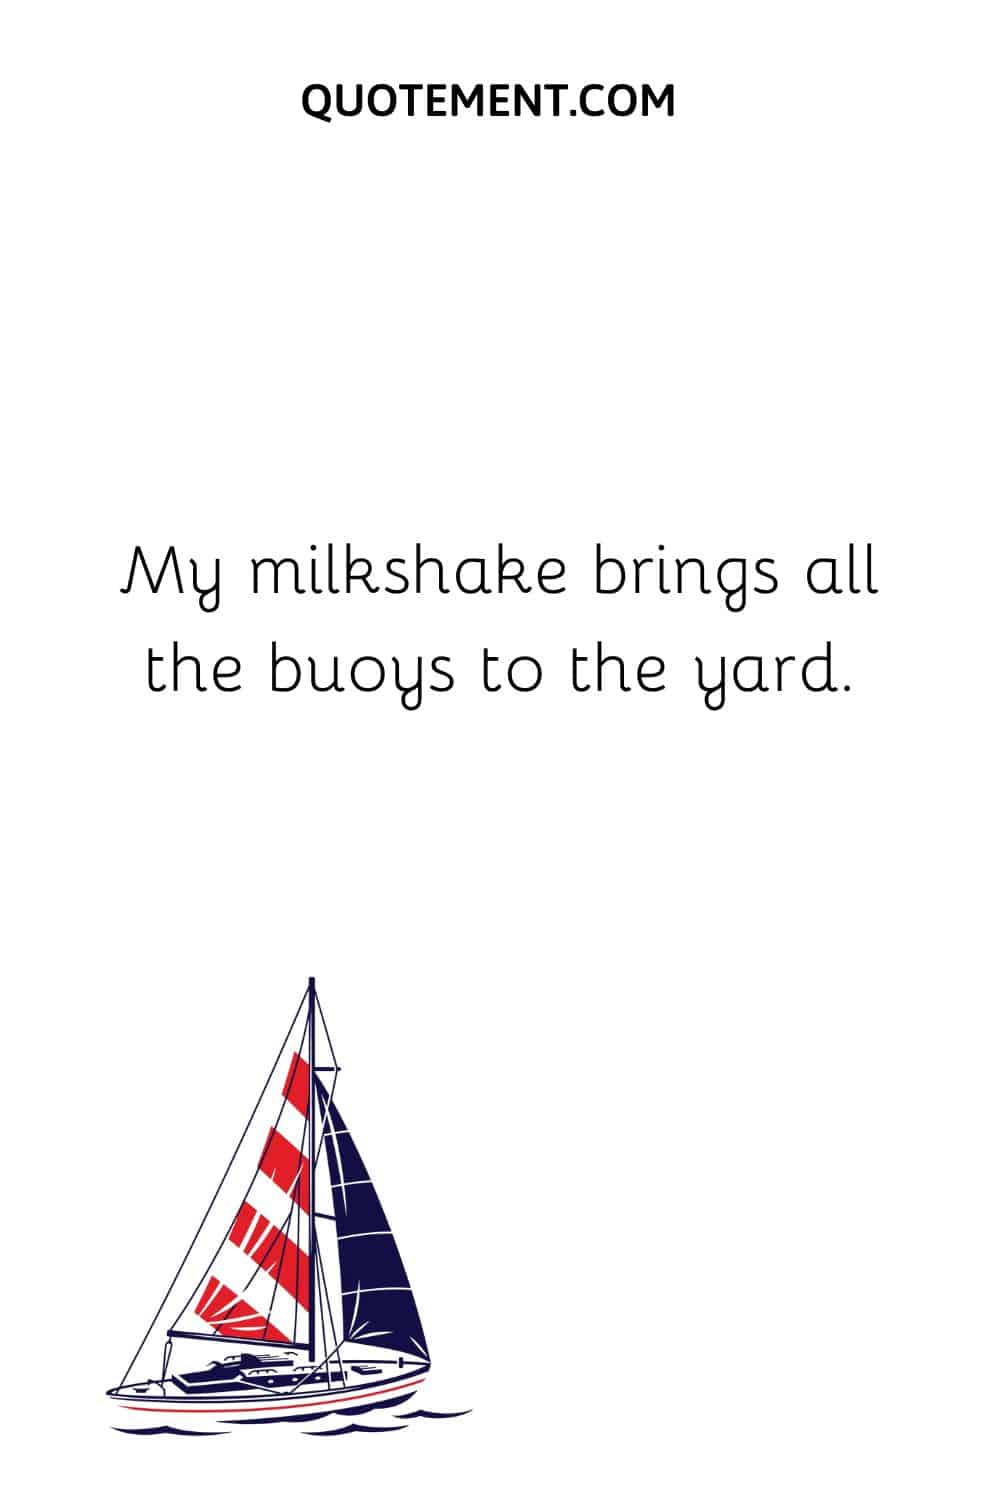 My milkshake brings all the buoys to the yard